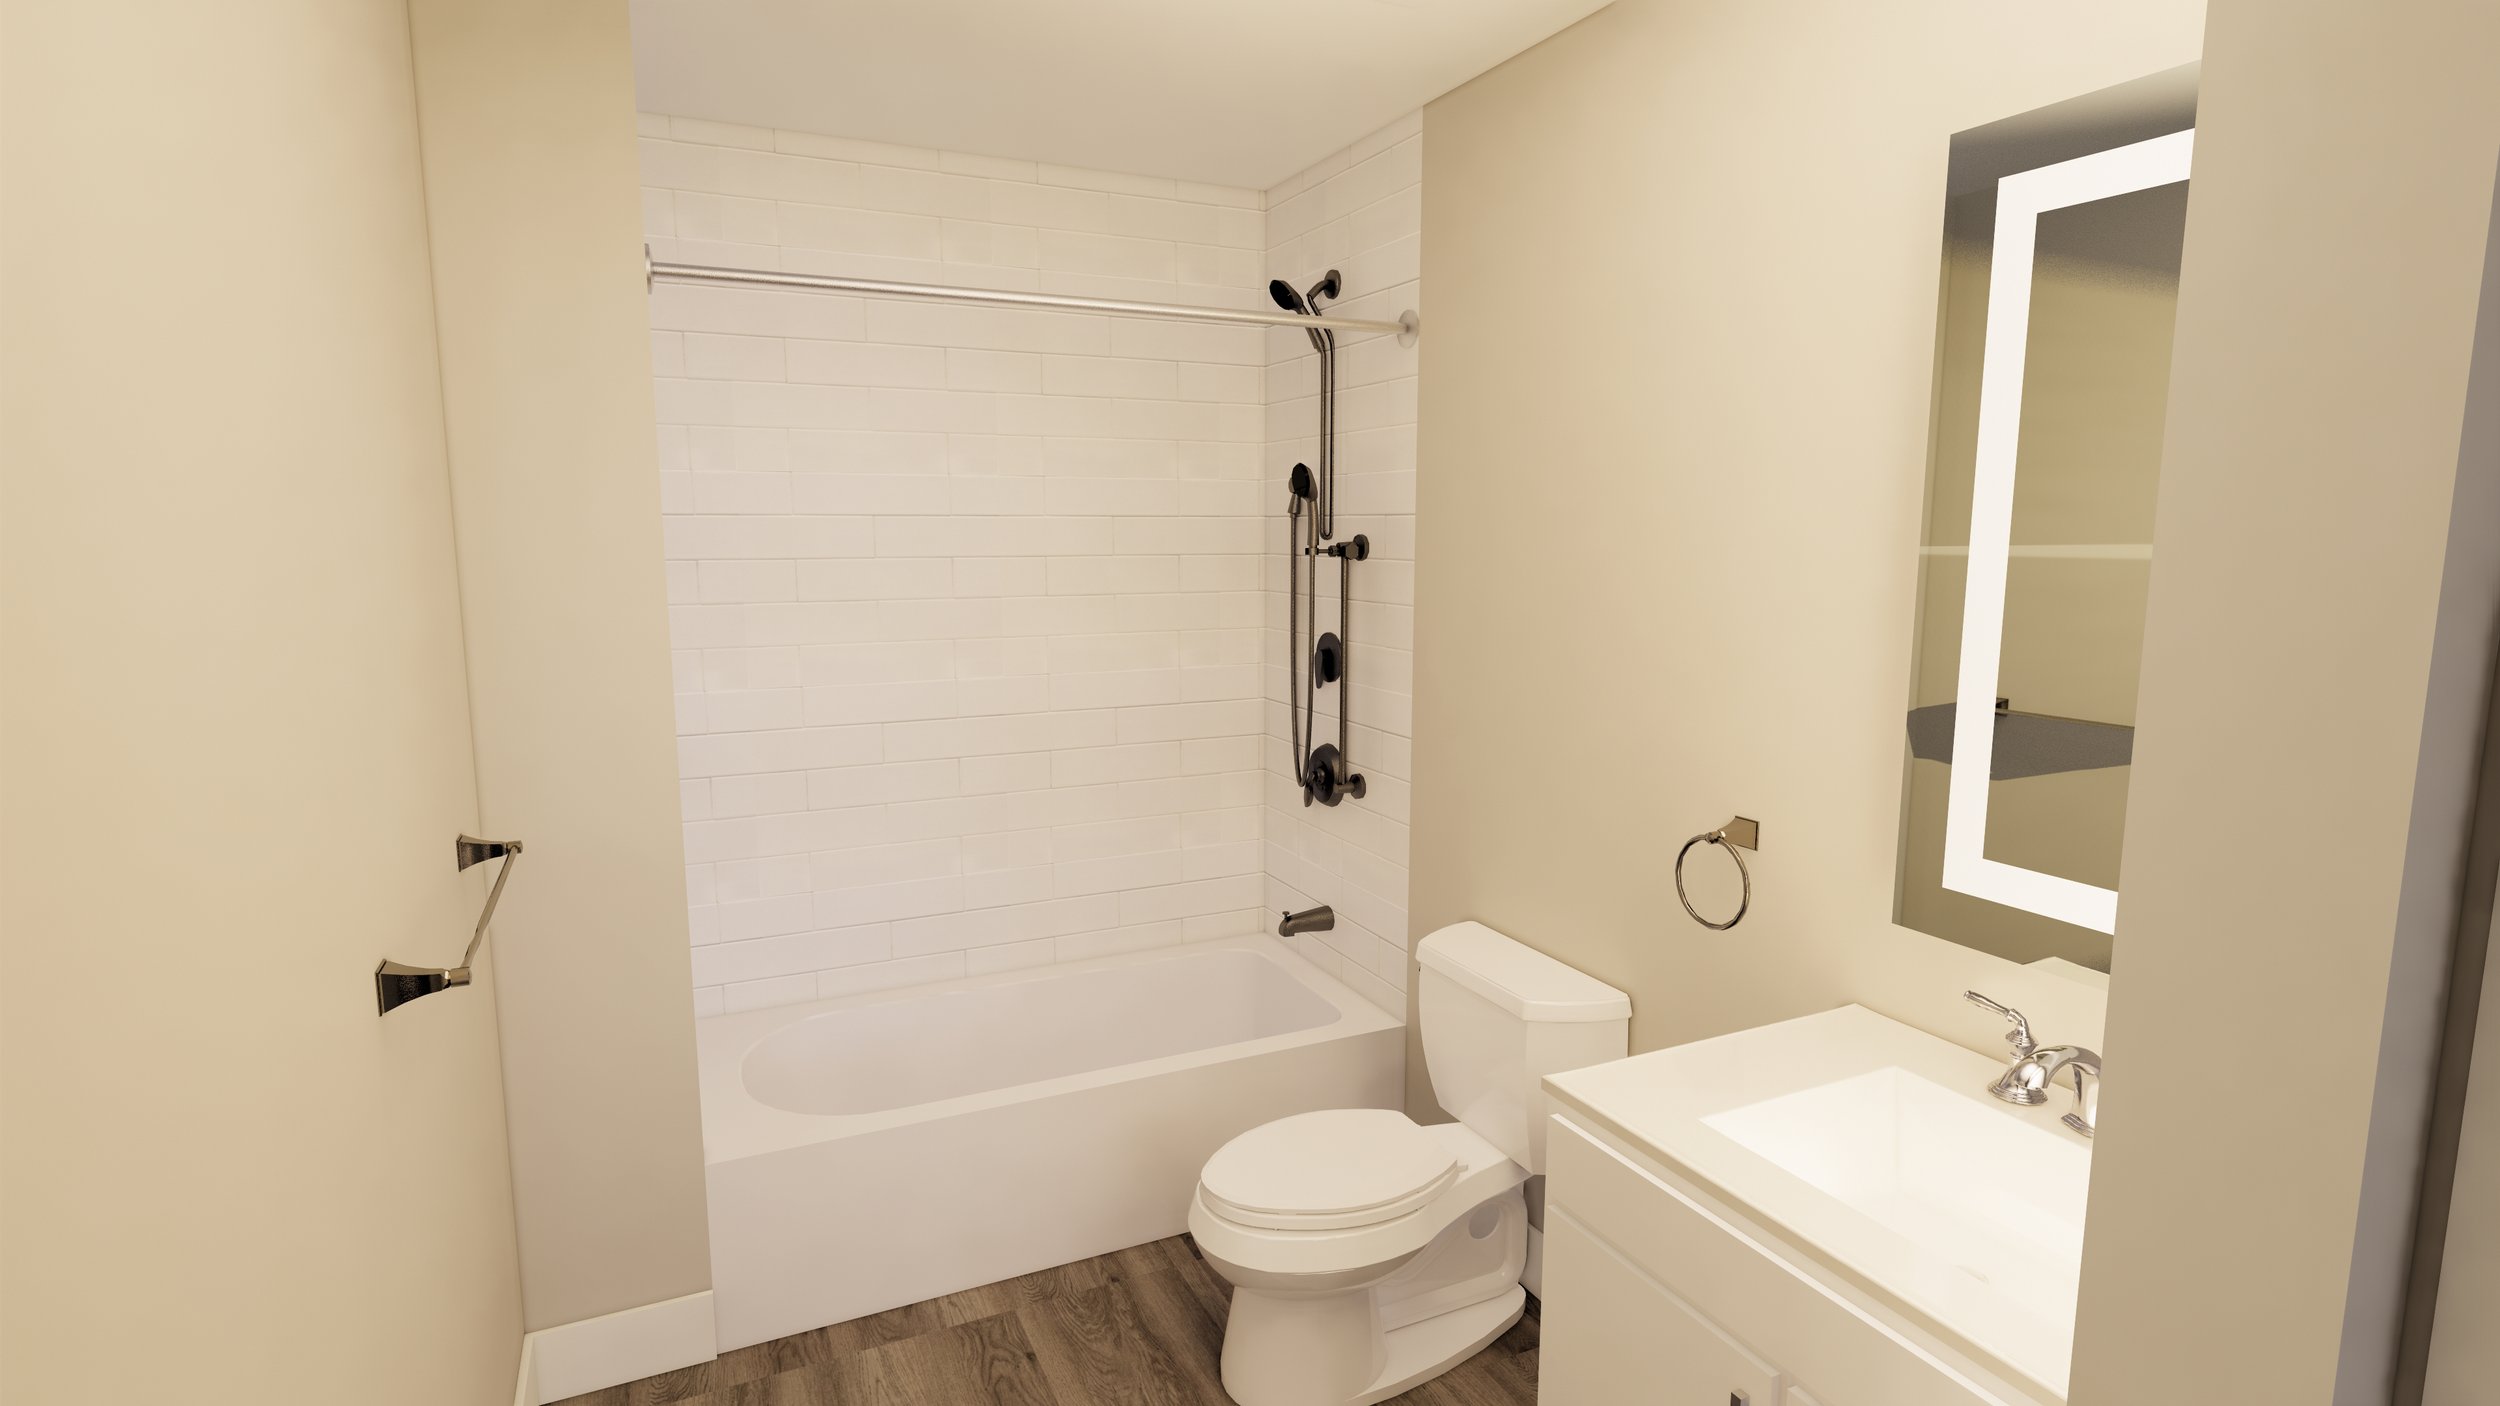 Interior - Typical Apartment Bathroom with Bathtub